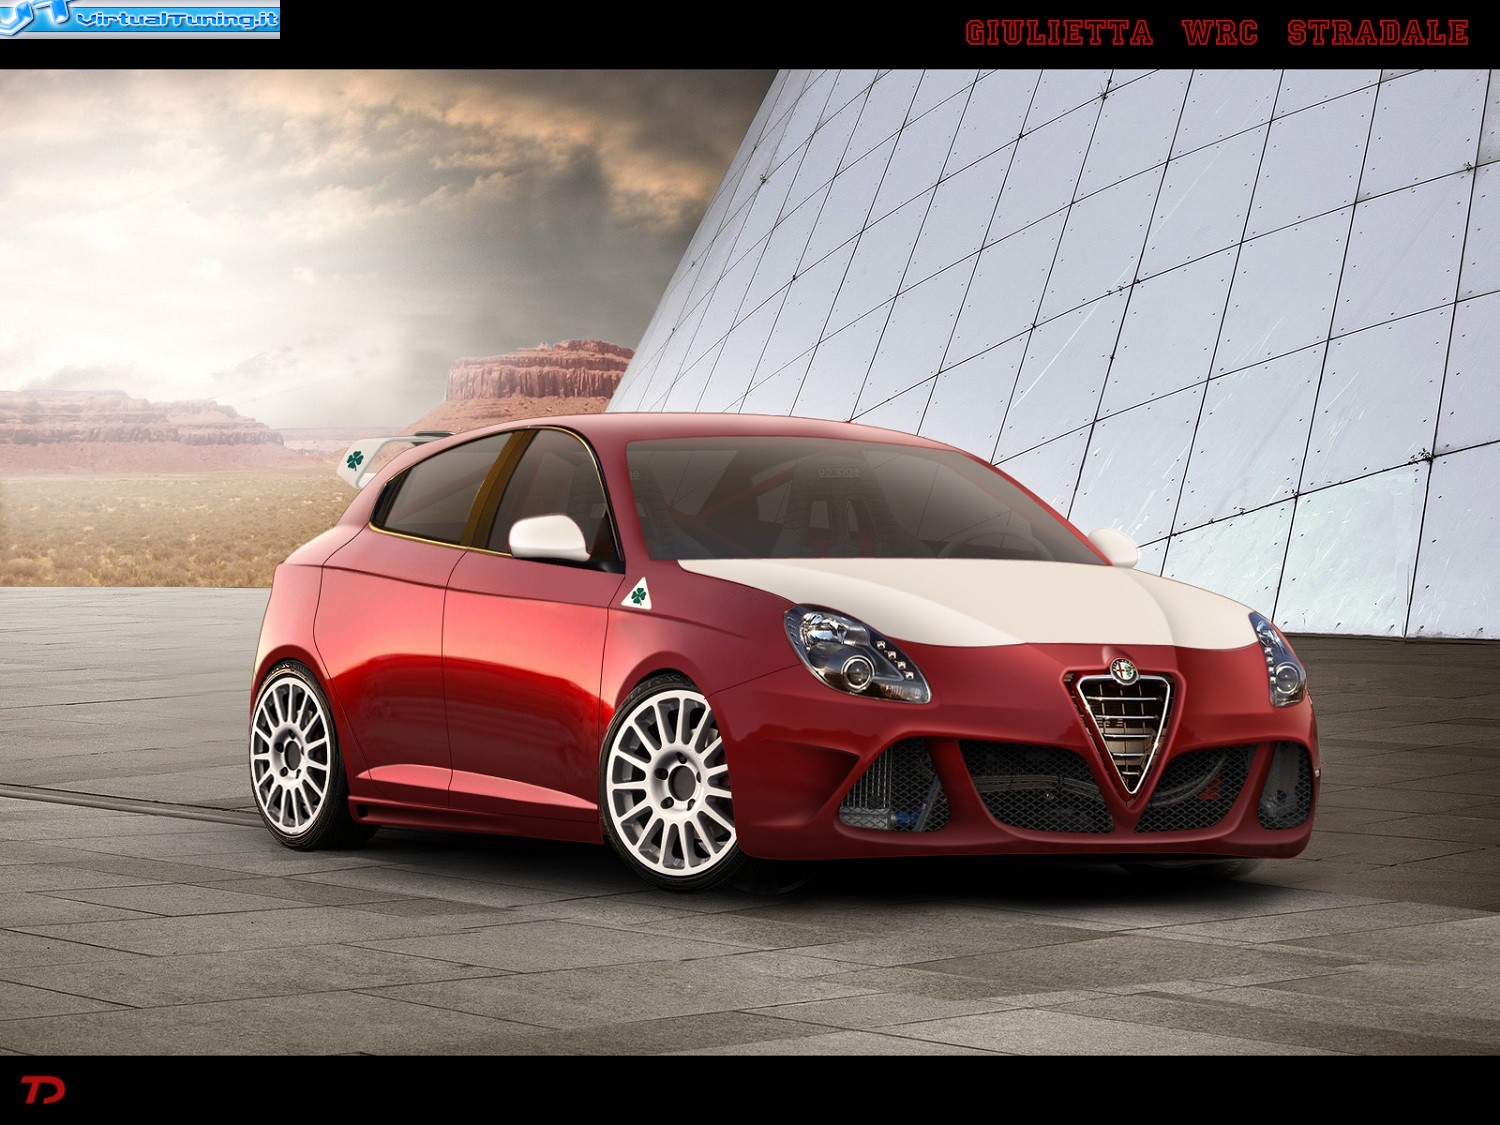 VirtualTuning ALFA ROMEO Giulietta WRC Stradale by Car Passion